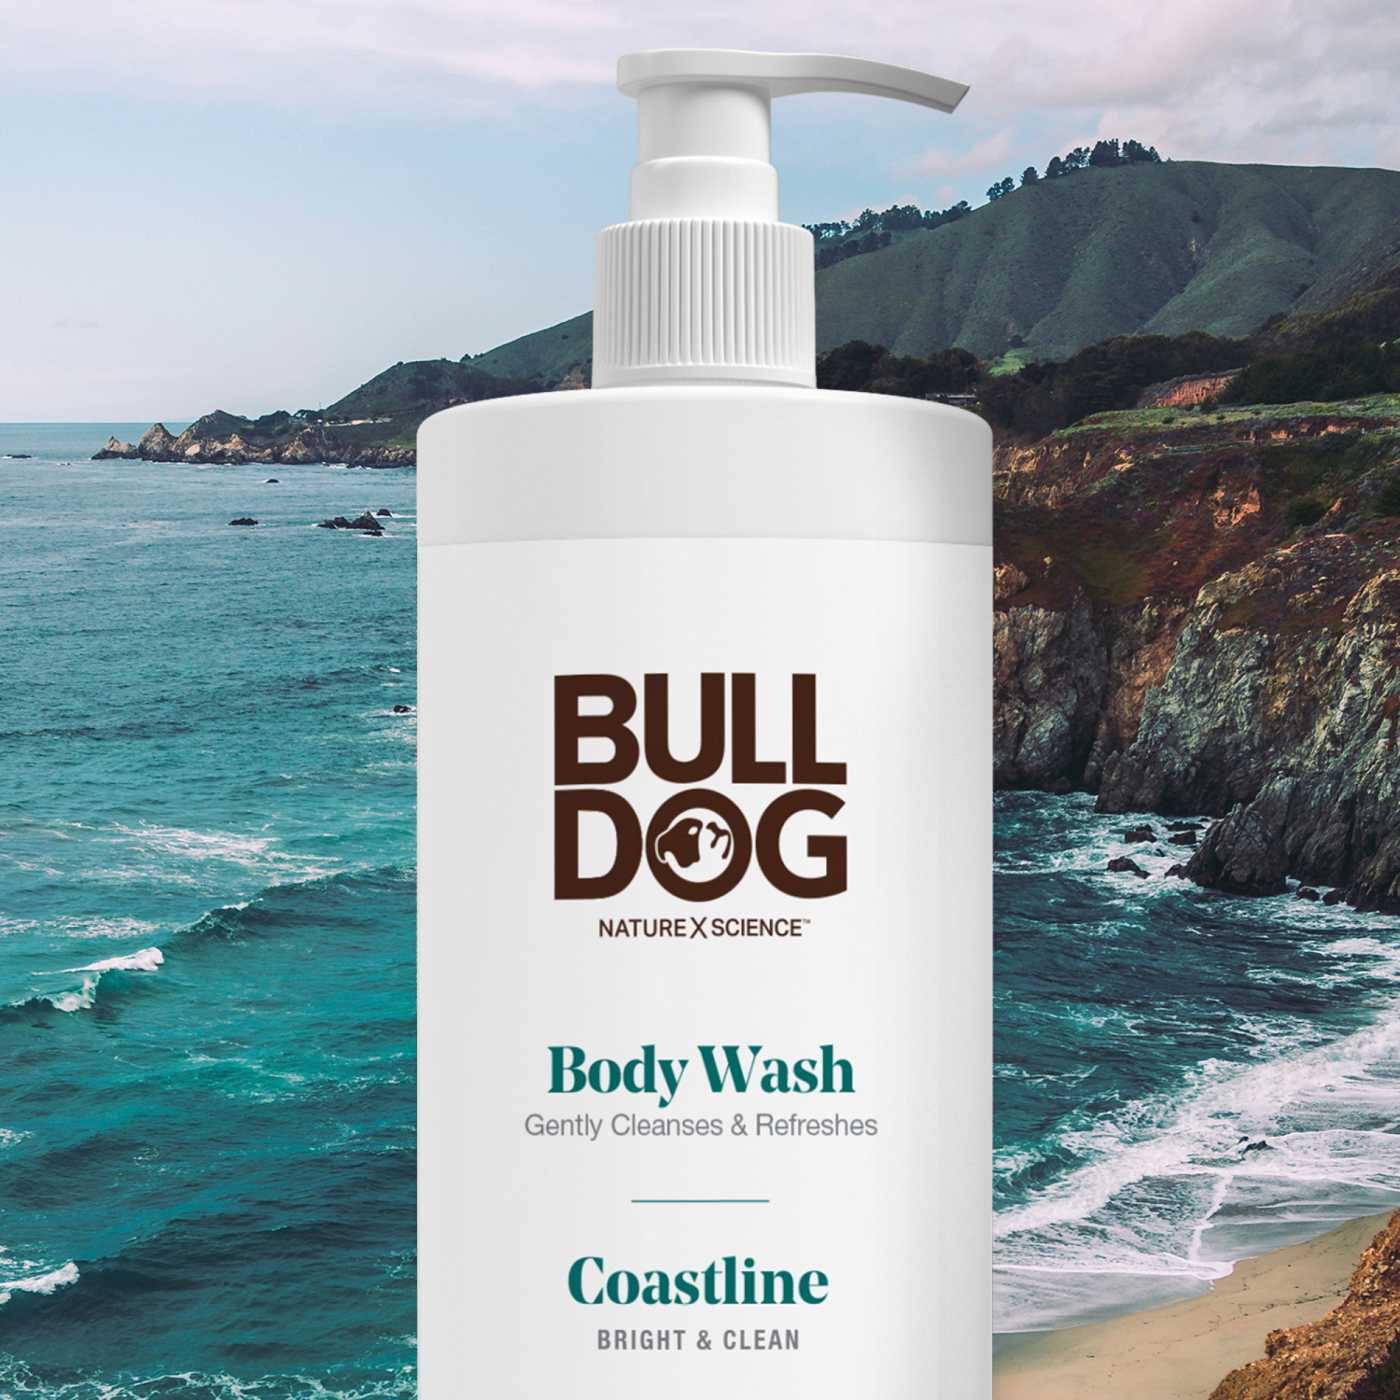 Bulldog Body Wash - Bright & Clean Coastline; image 4 of 7